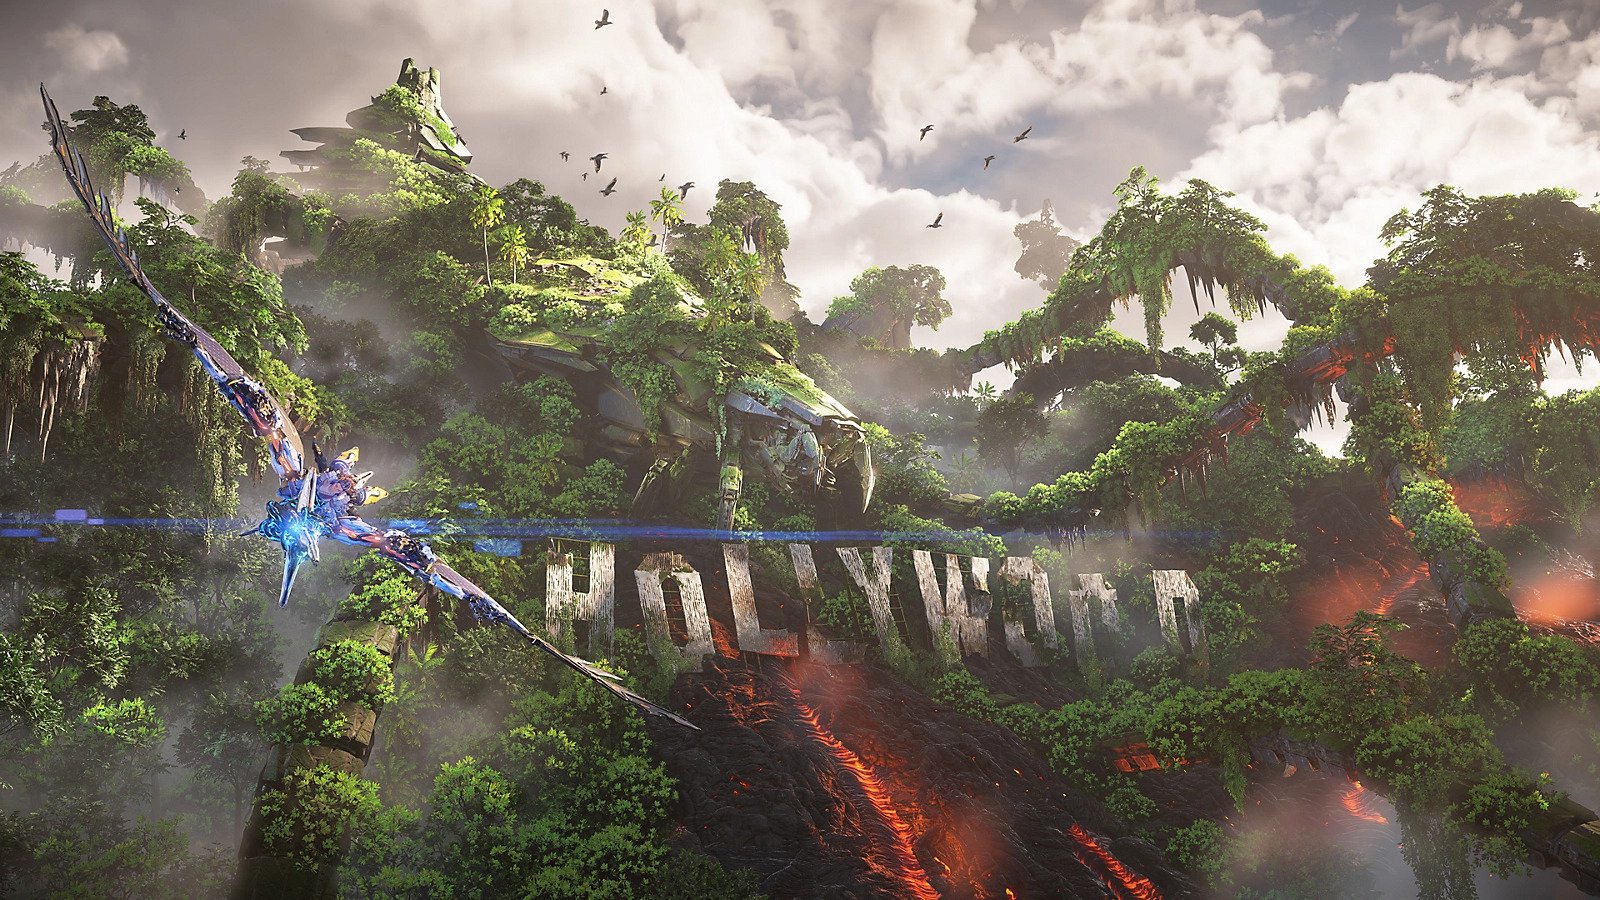 Review: Horizon Forbidden West is a stunning sequel